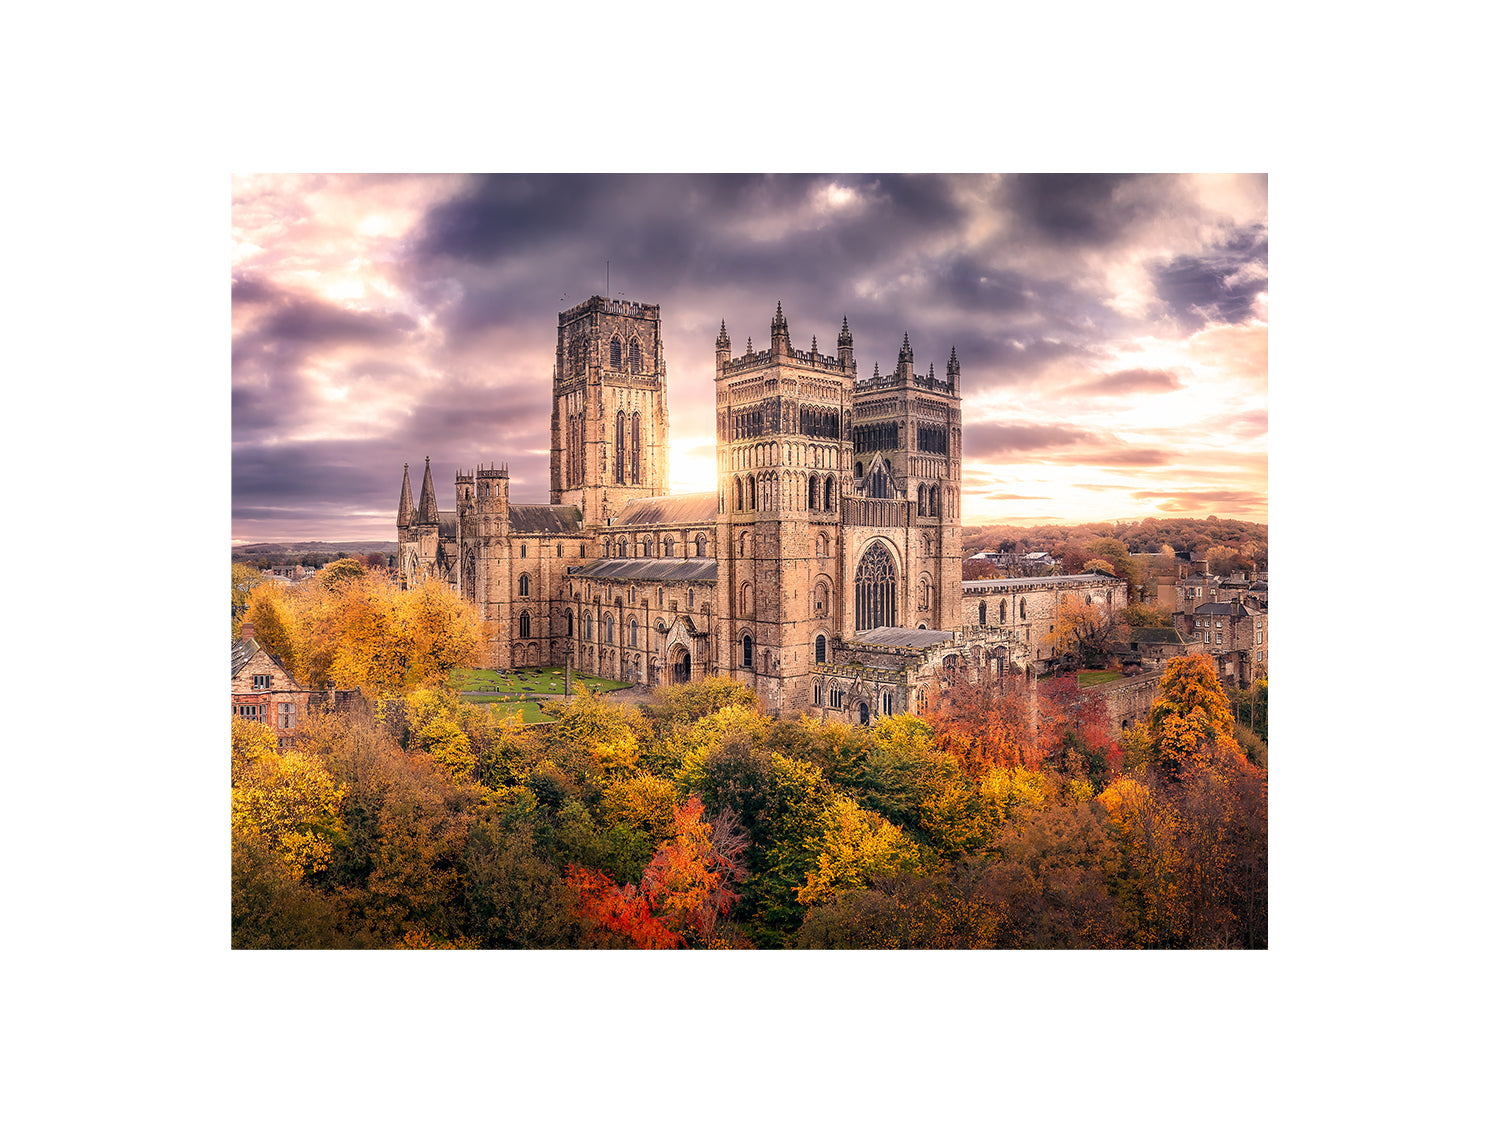 Durham Cathedral's "Risen"